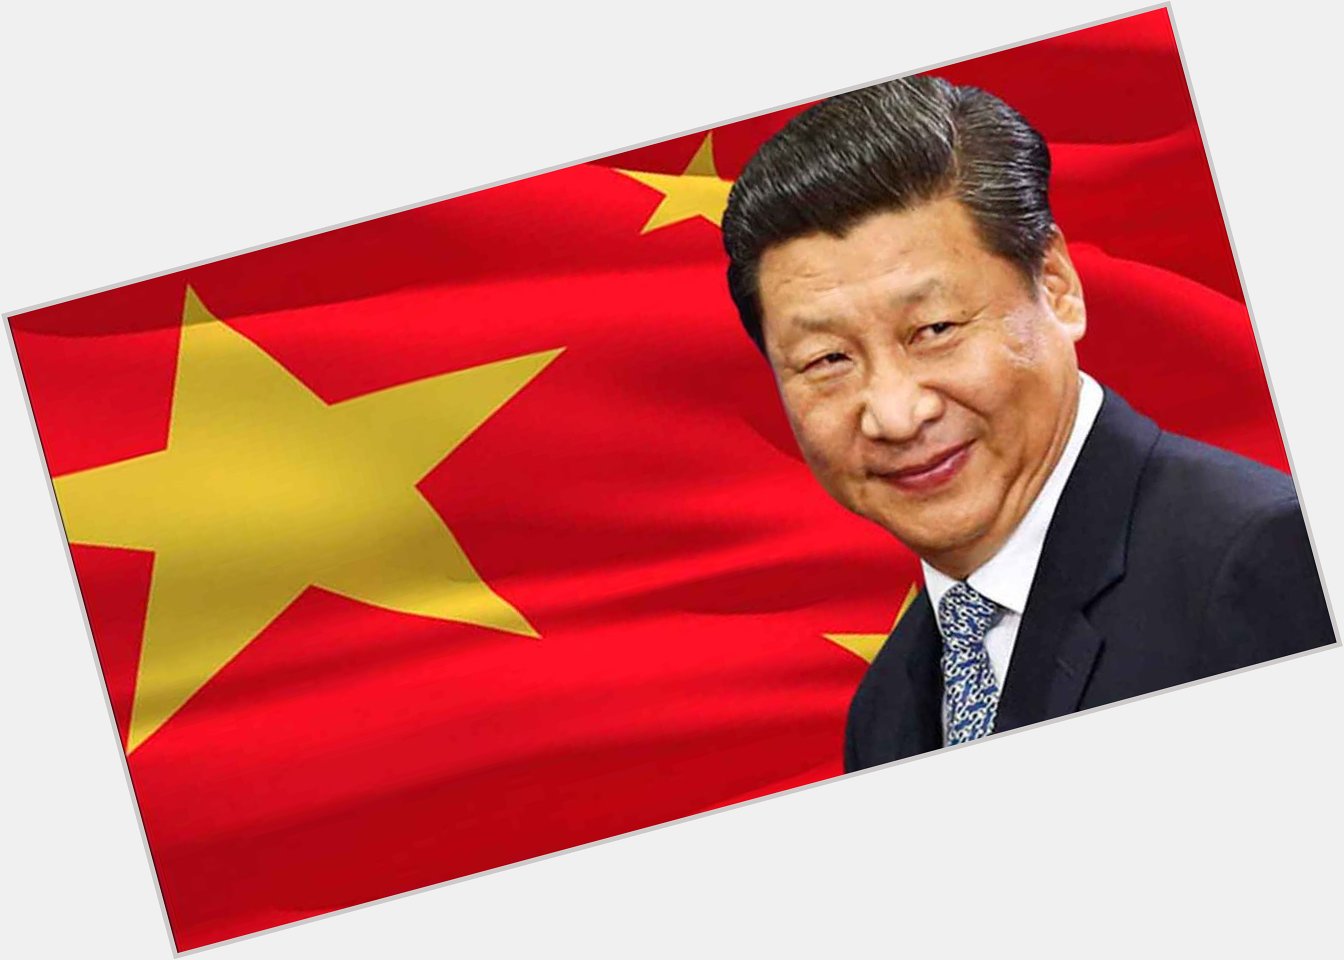   Happy 70th birthday to Xi Jinping!  